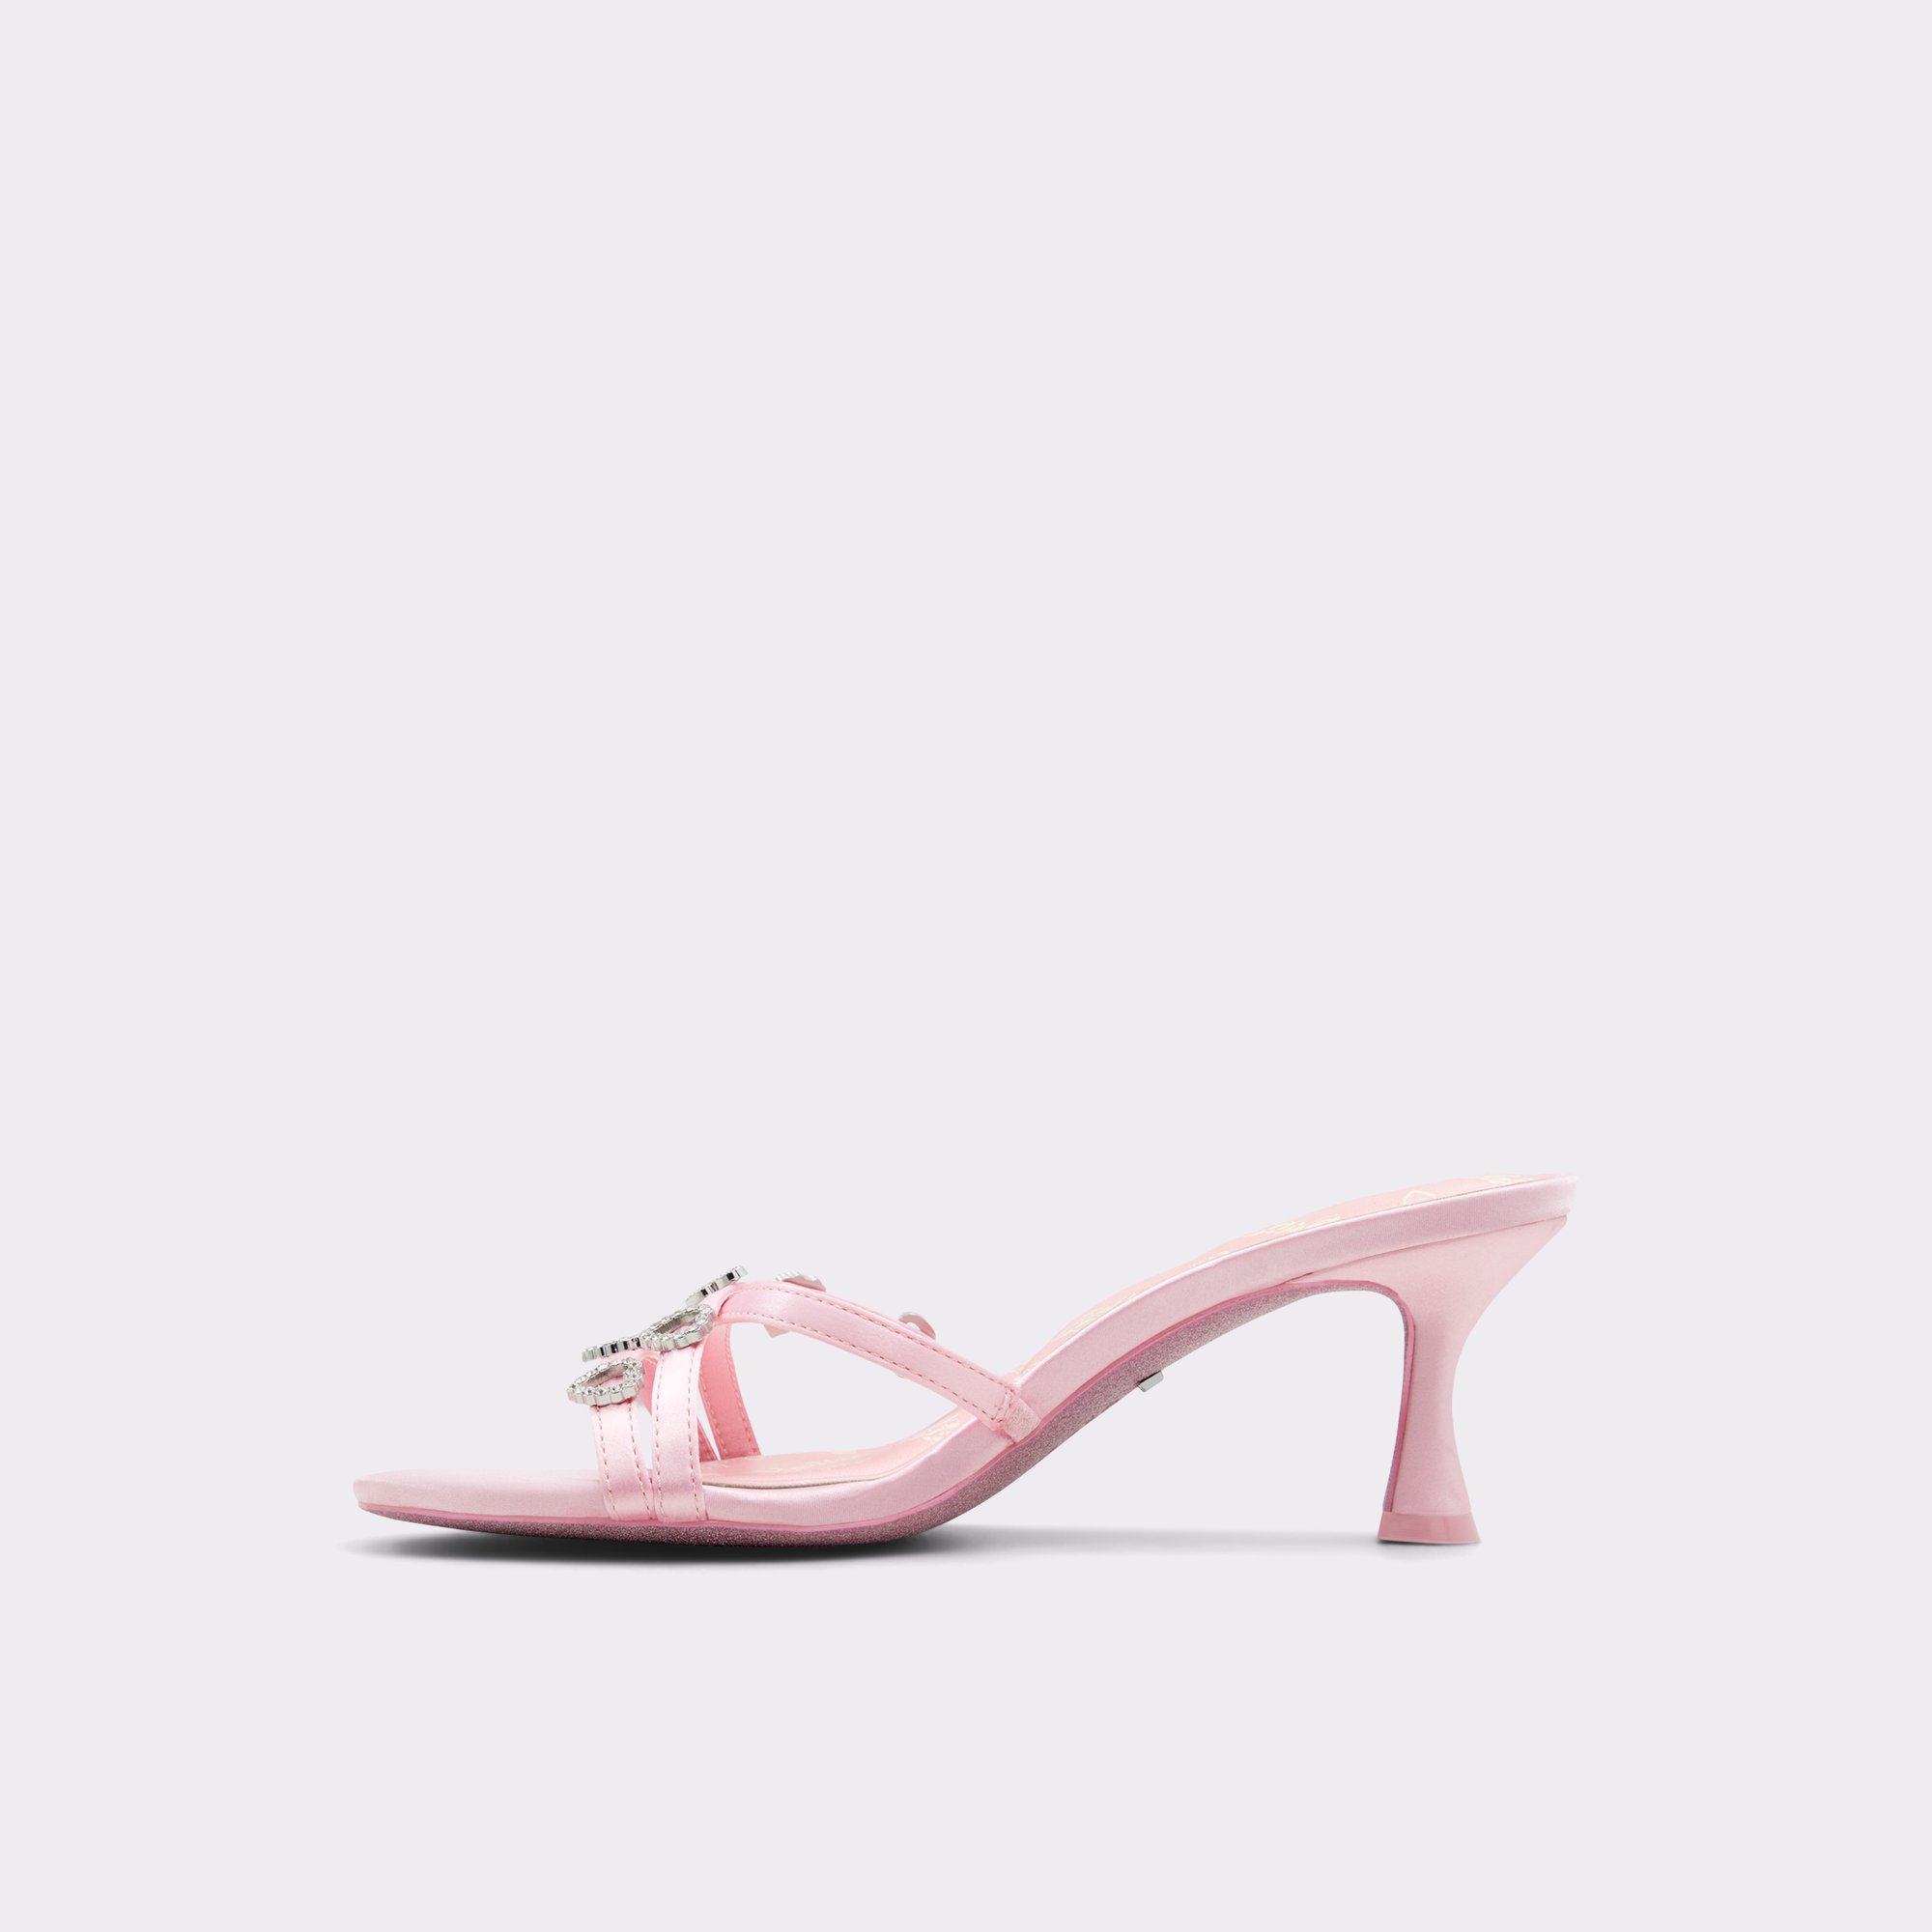 Aldo Barbie Mule Women's Shoes Medium Pink : 37.5 (US Women's 7.5) B - Medium